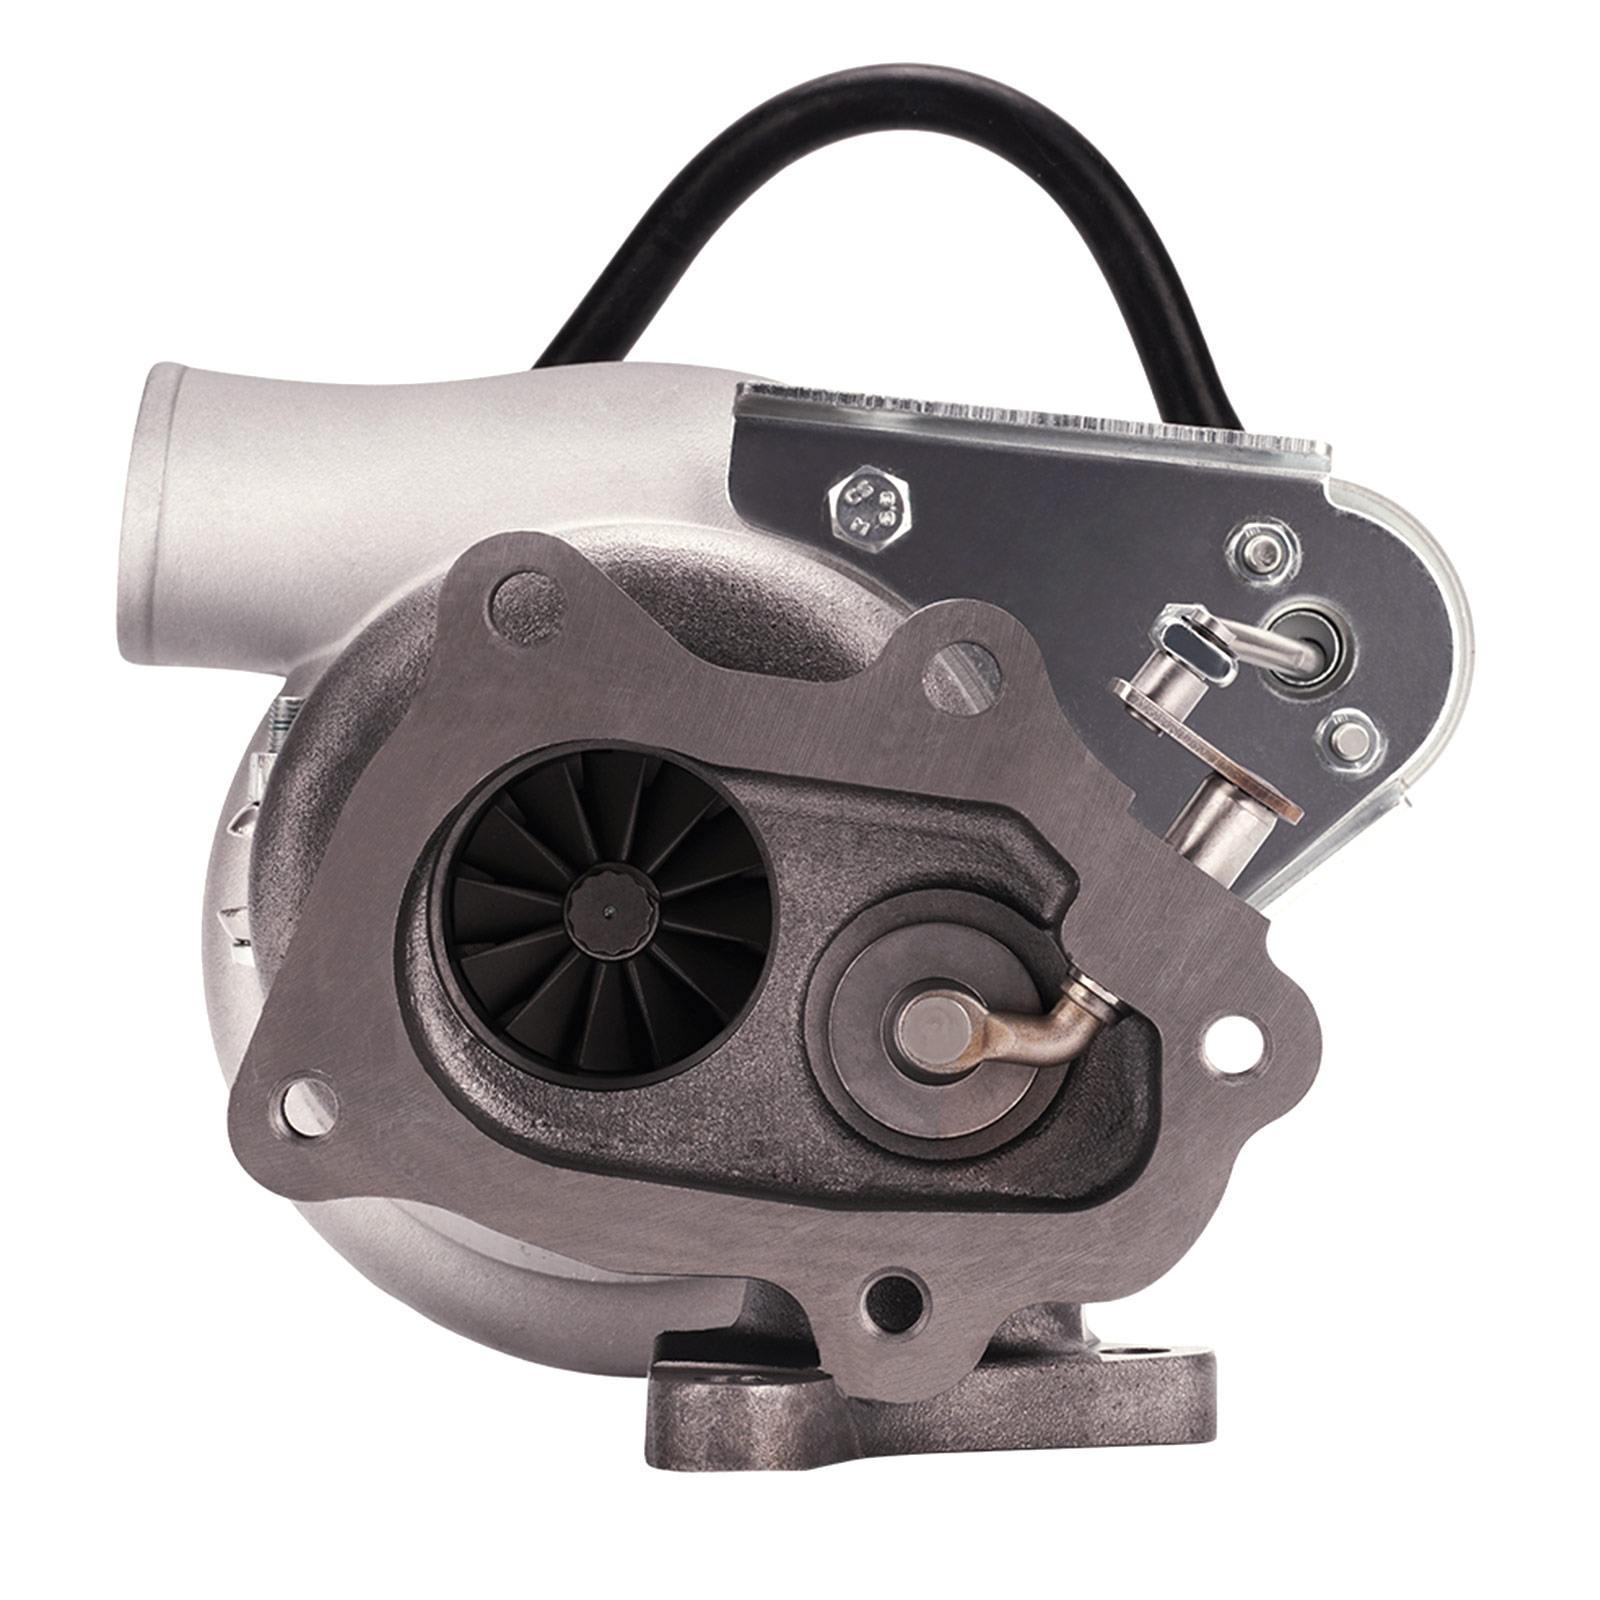 Billet Turbolader for SUBARU IMPREZA WRX STI TD05 20G EJ20 EJ25 Turbocharger